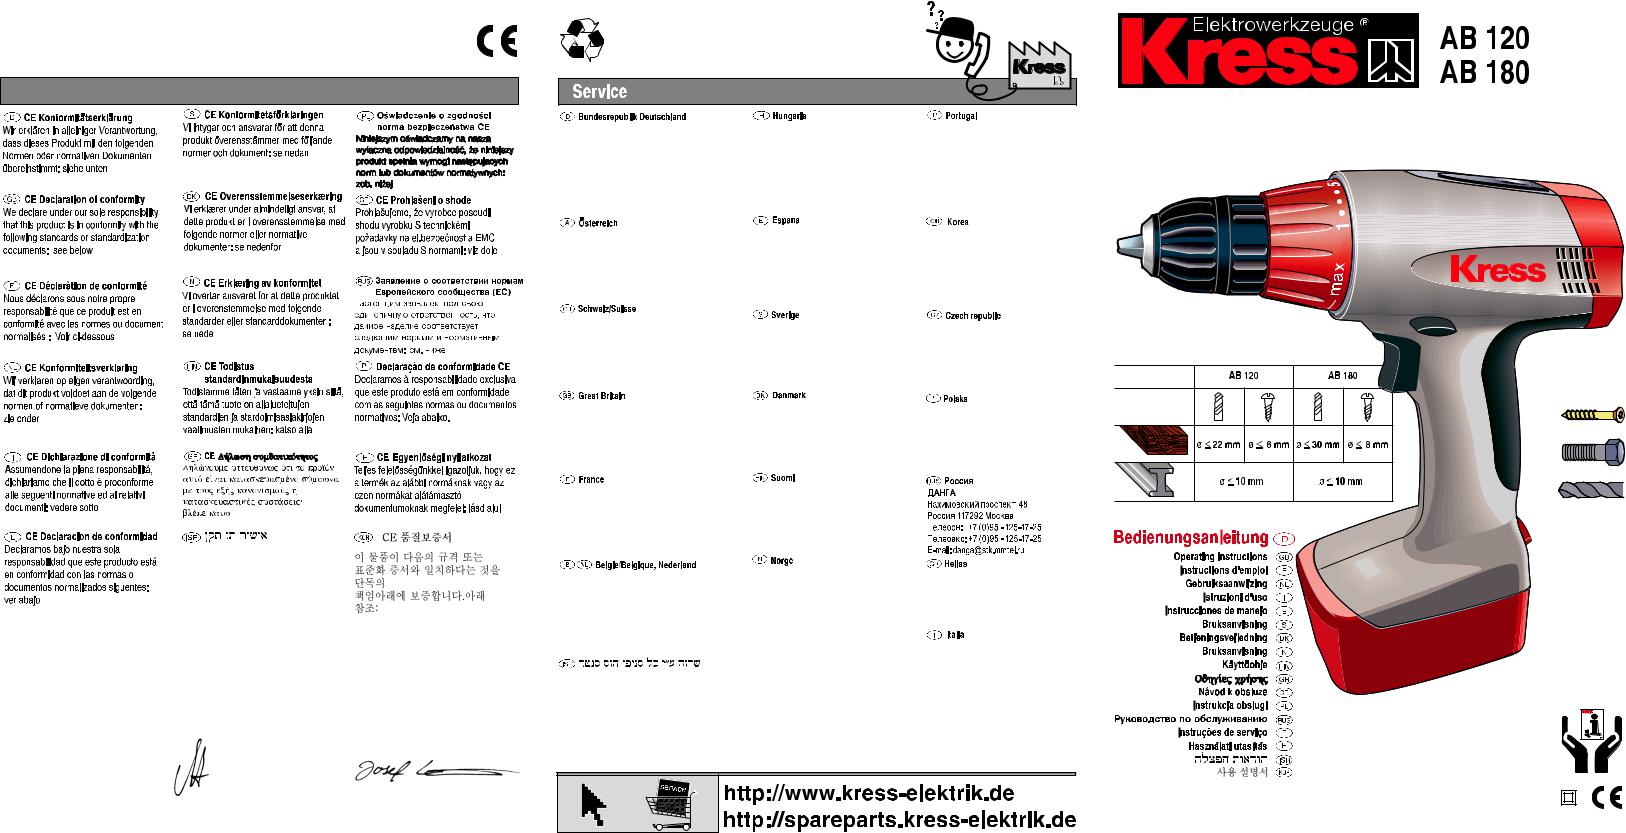 KRESS AB 120 User Manual